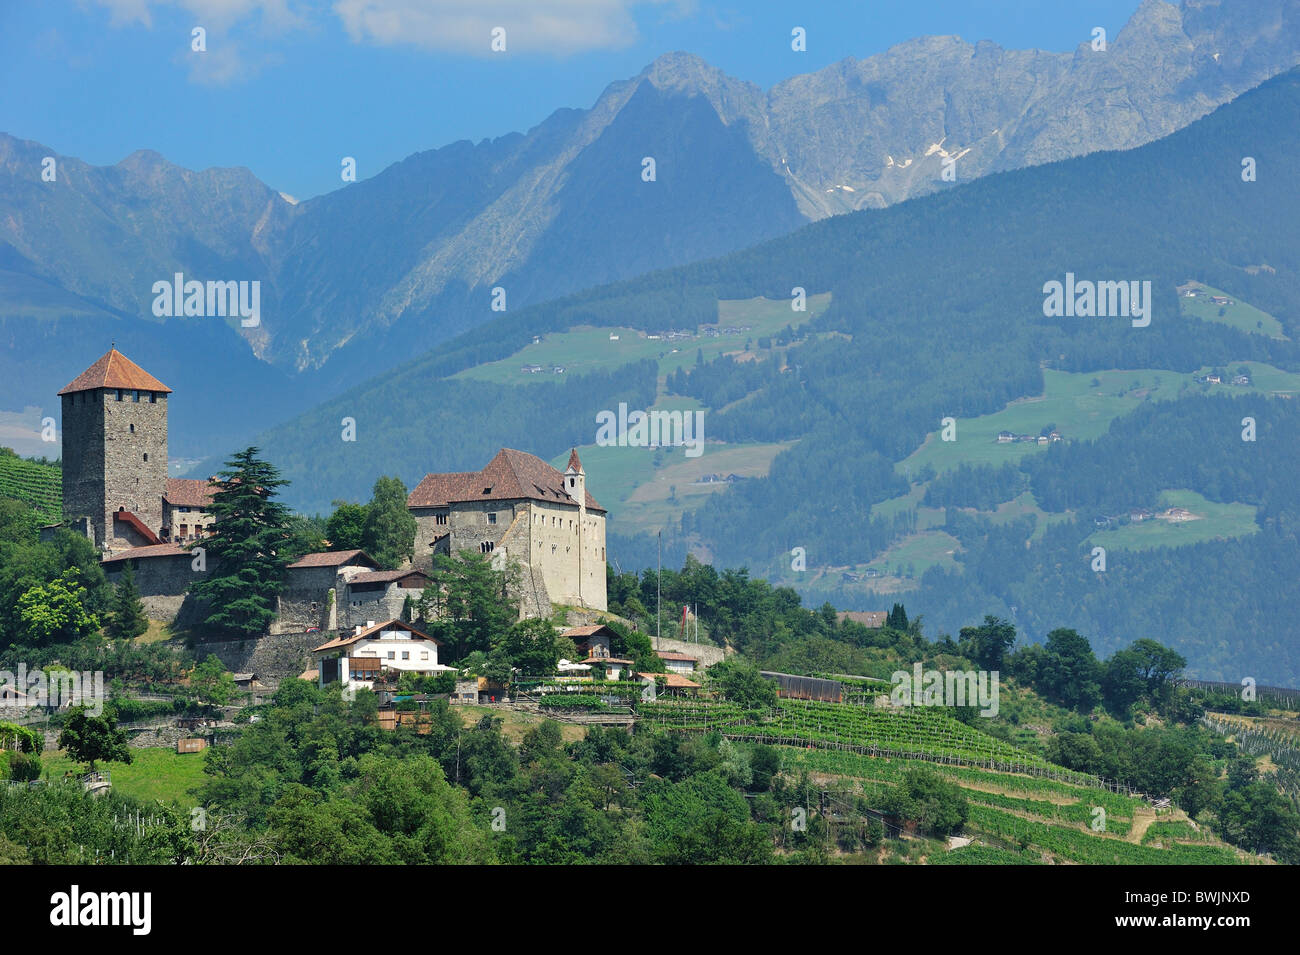 The castle Schloss Tirol and apple orchard at Tirolo / Dorf Tirol, Dolomites, Italy Stock Photo